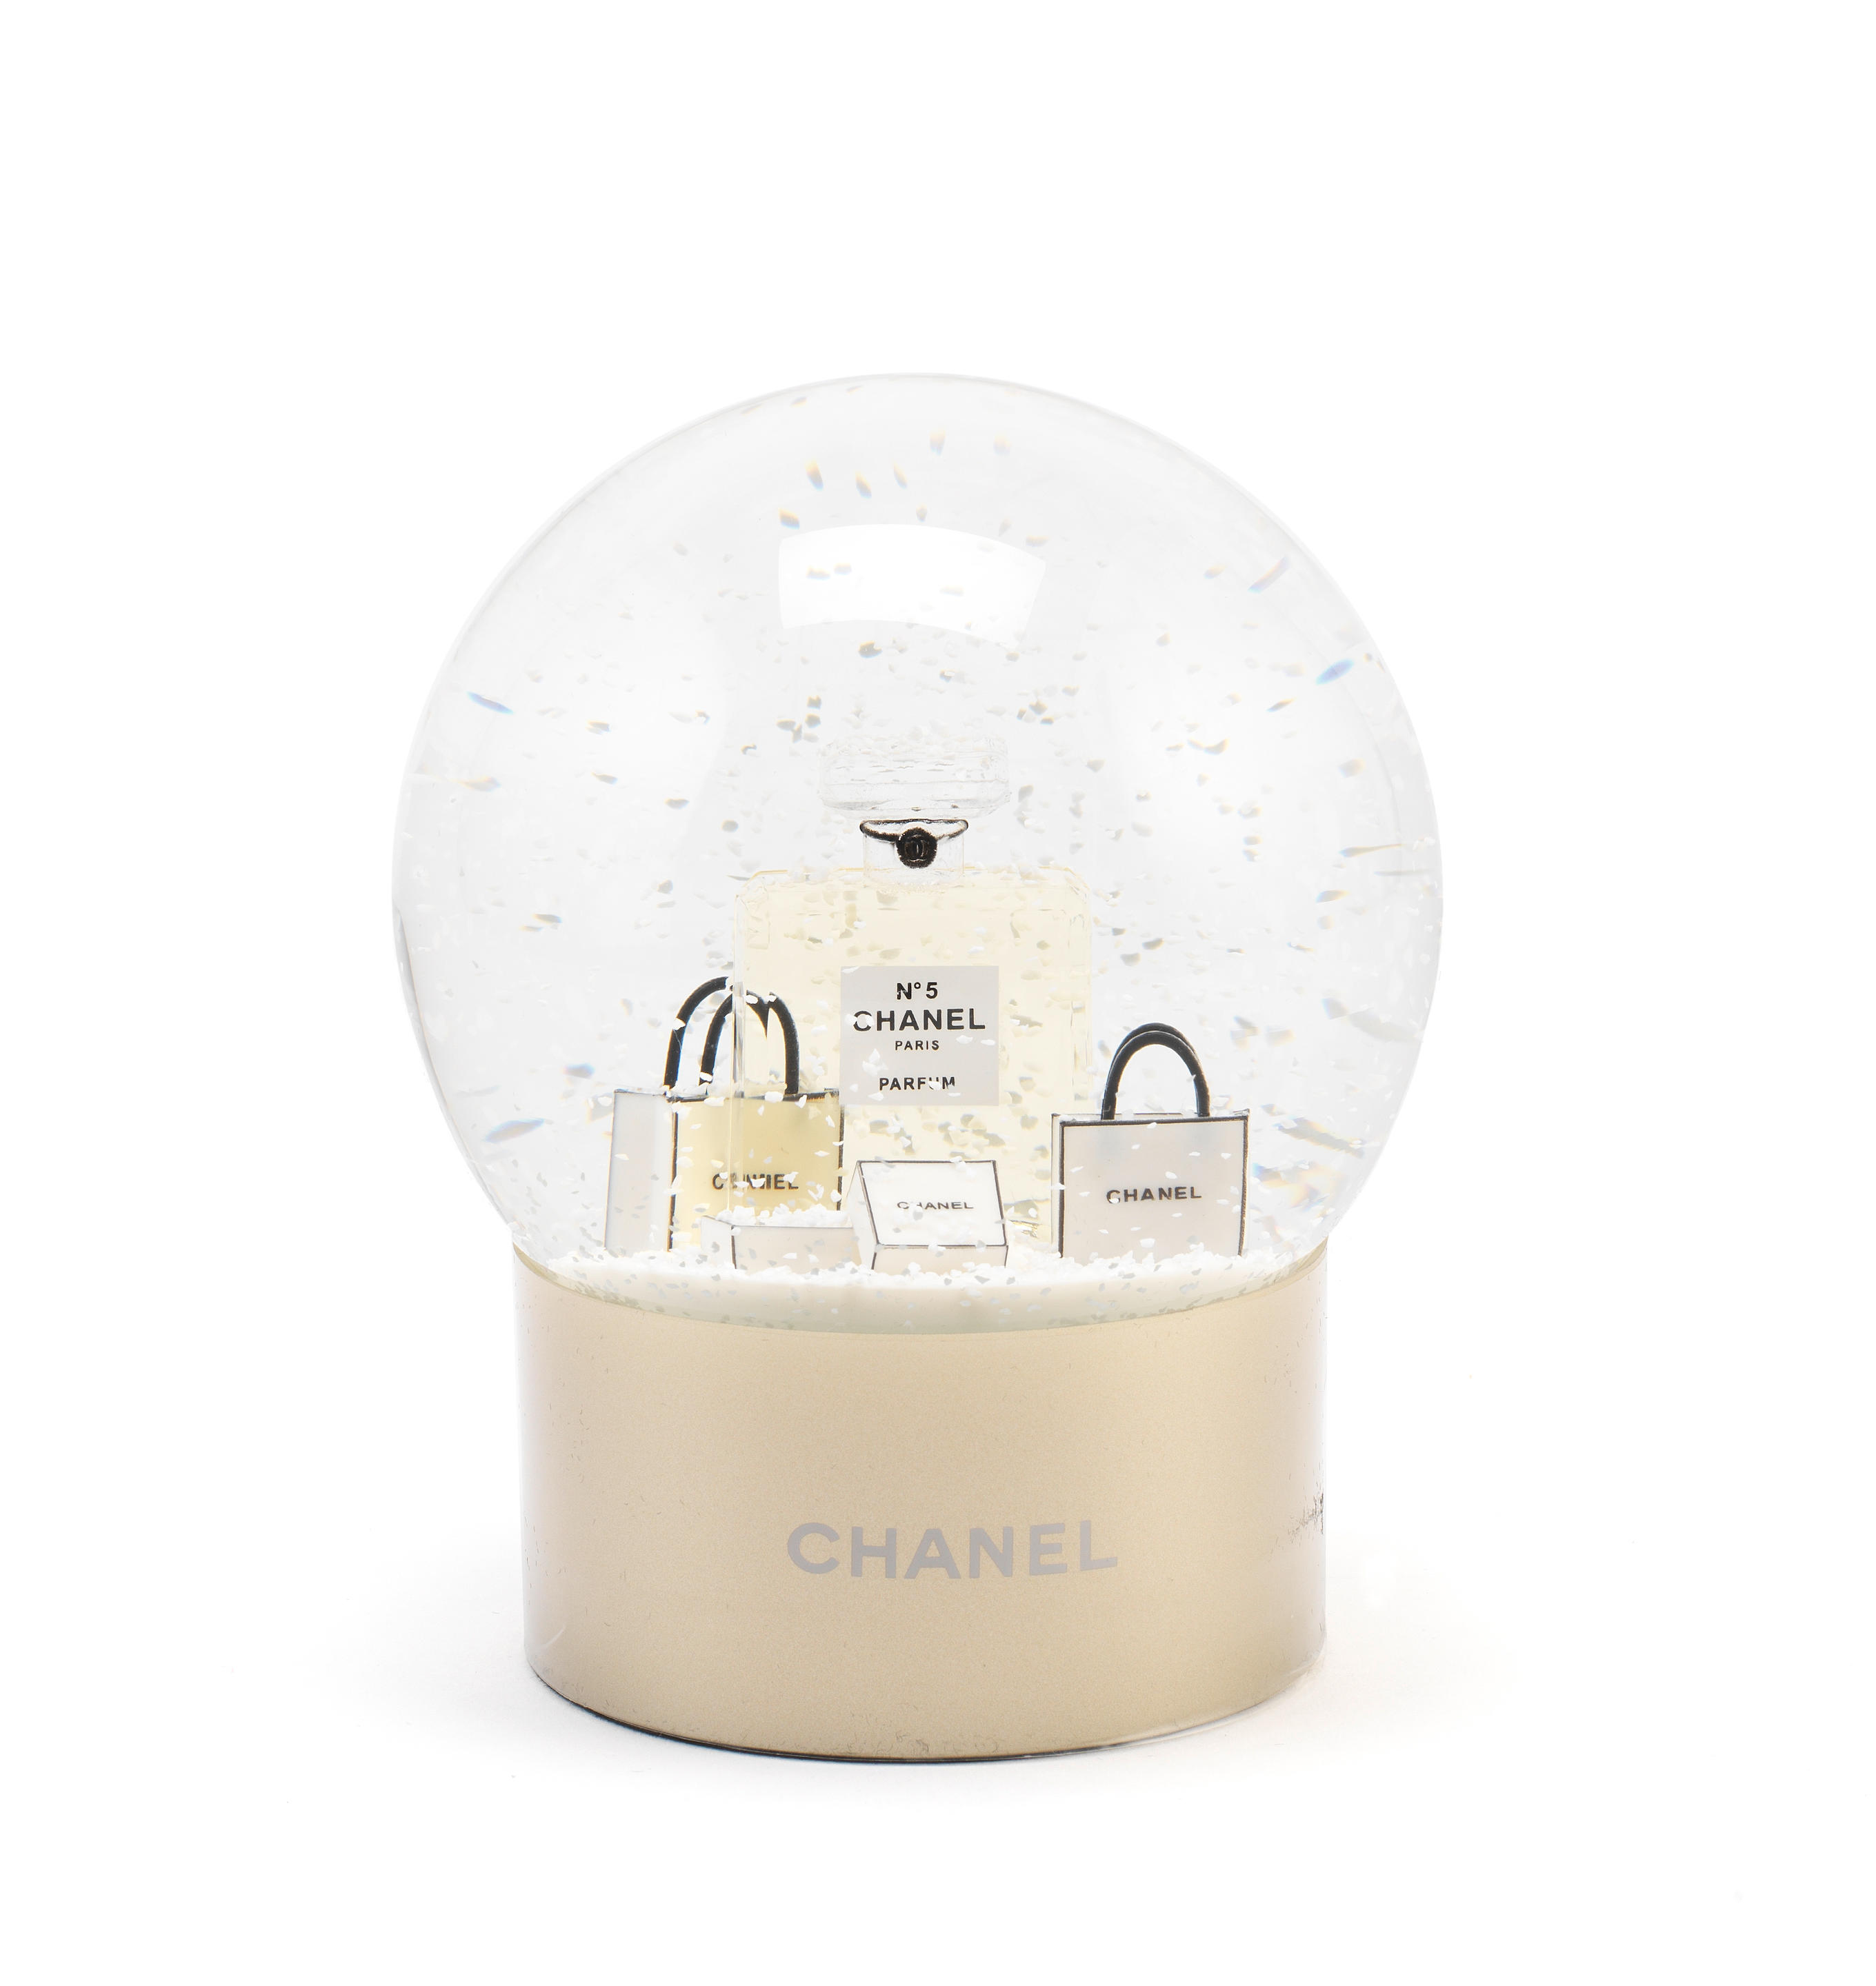 Chanel No 5 Snow Globe, Chanel, VIP gift, (Includes box) - Bonhams